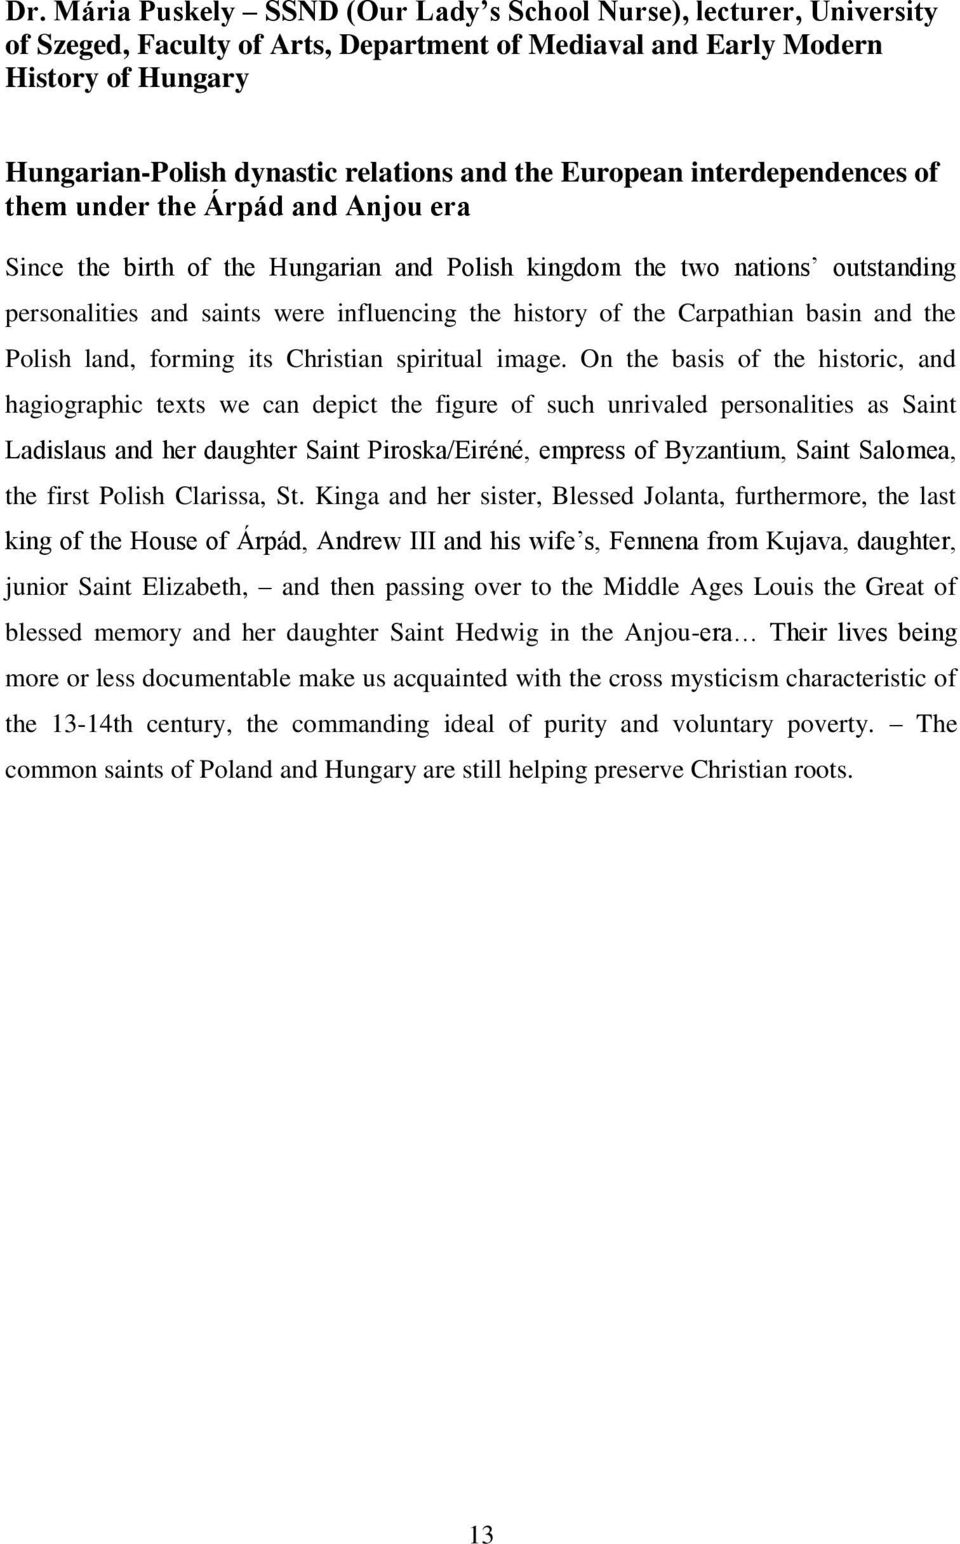 history of the Carpathian basin and the Polish land, forming its Christian spiritual image.